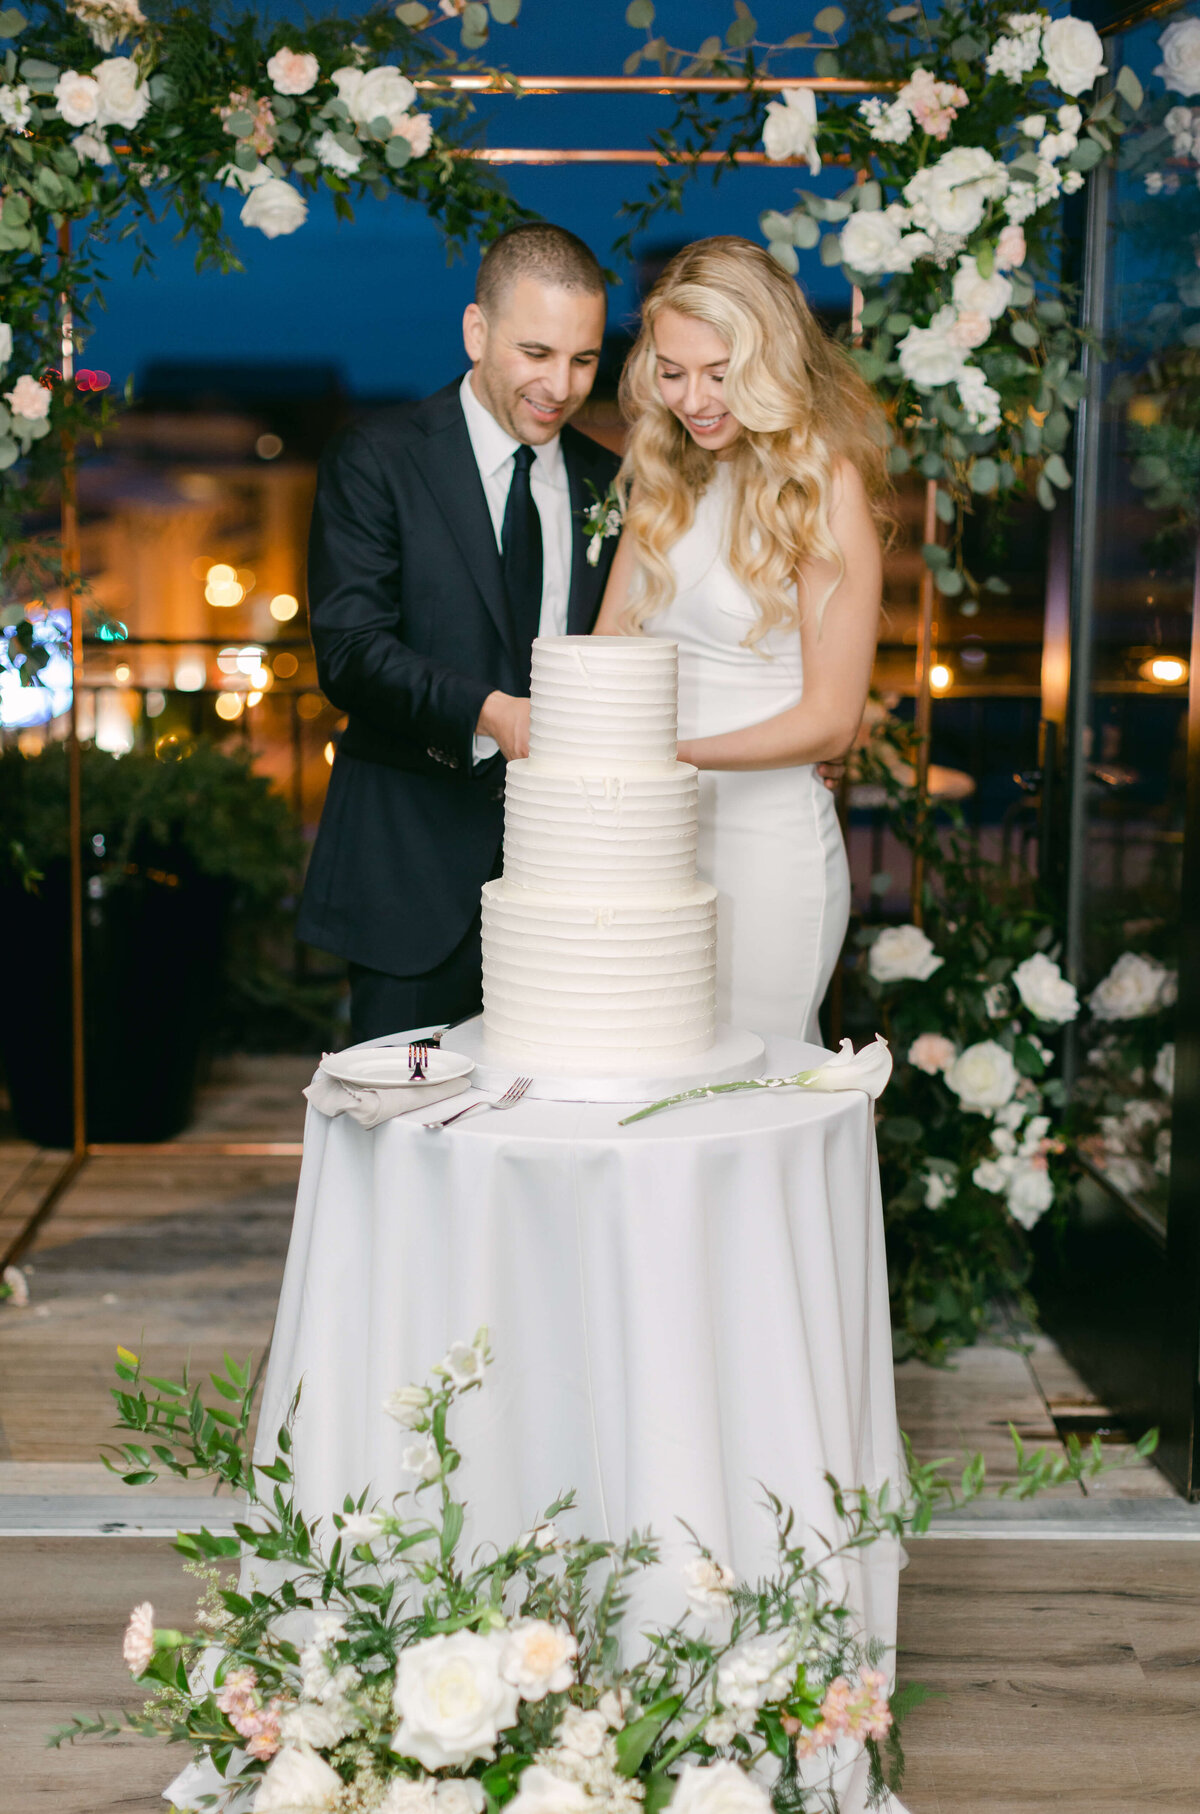 A bride and groom cut their wedding cake.